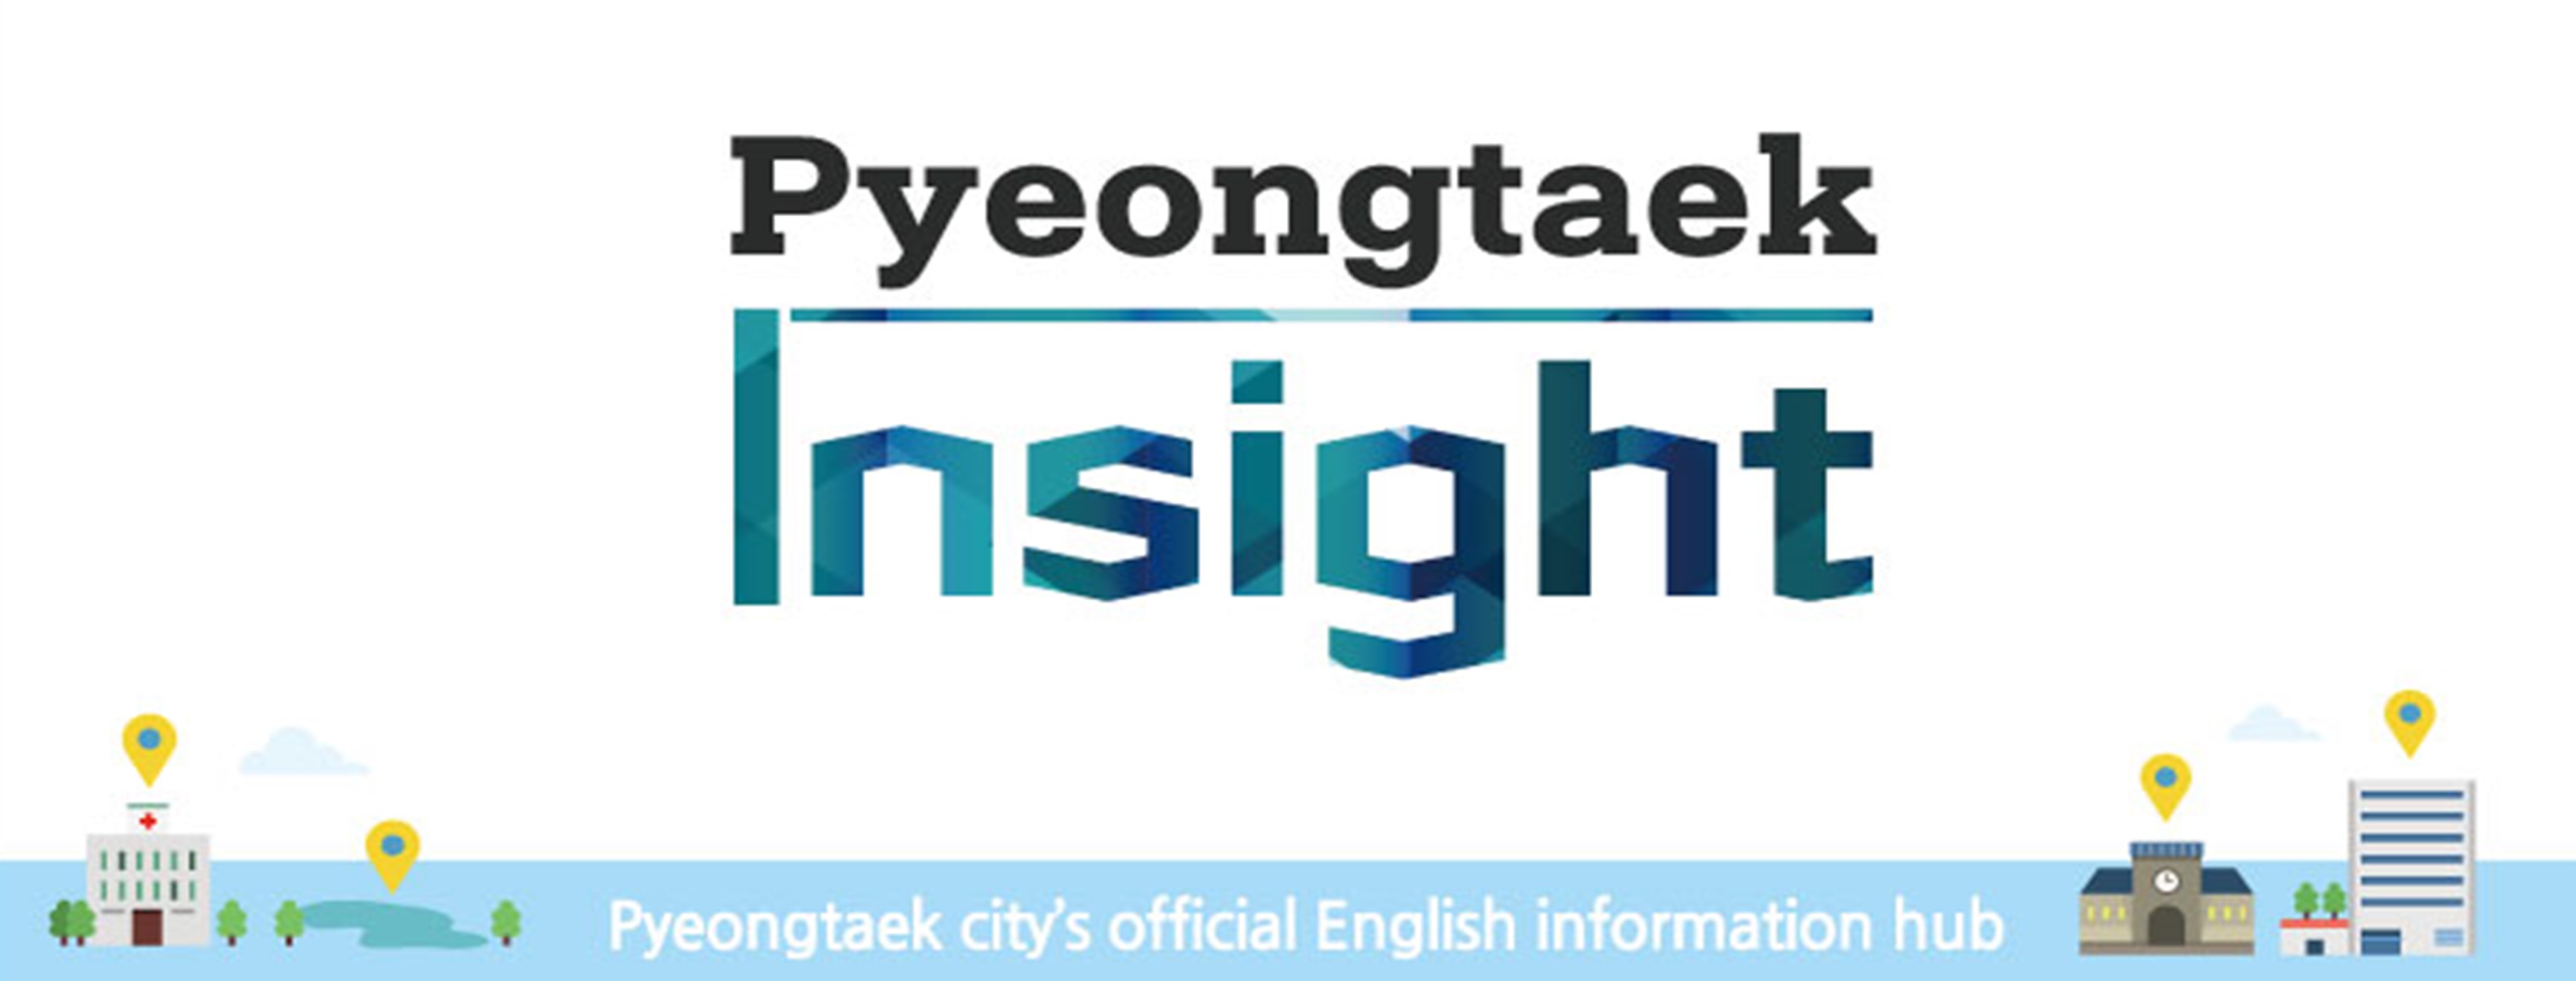 Pyeongtaek Insight
Pyeongtaek city's official English information hub